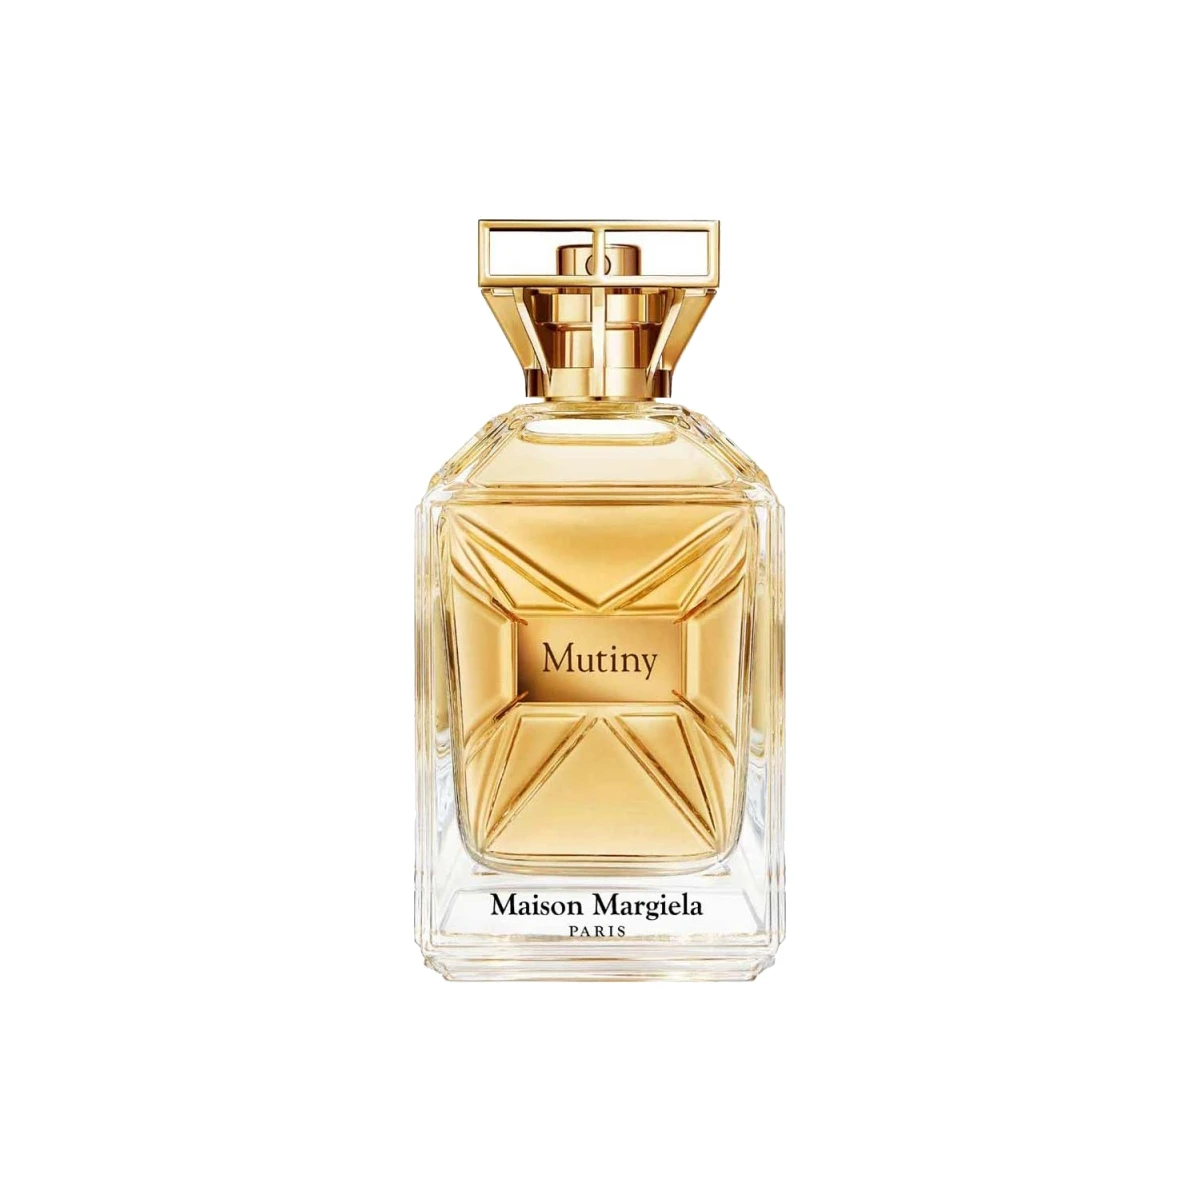 Maison Margiela马丁马吉拉莫蒂尼中性香水 EDP浓香水50-90ml,价格$74.80